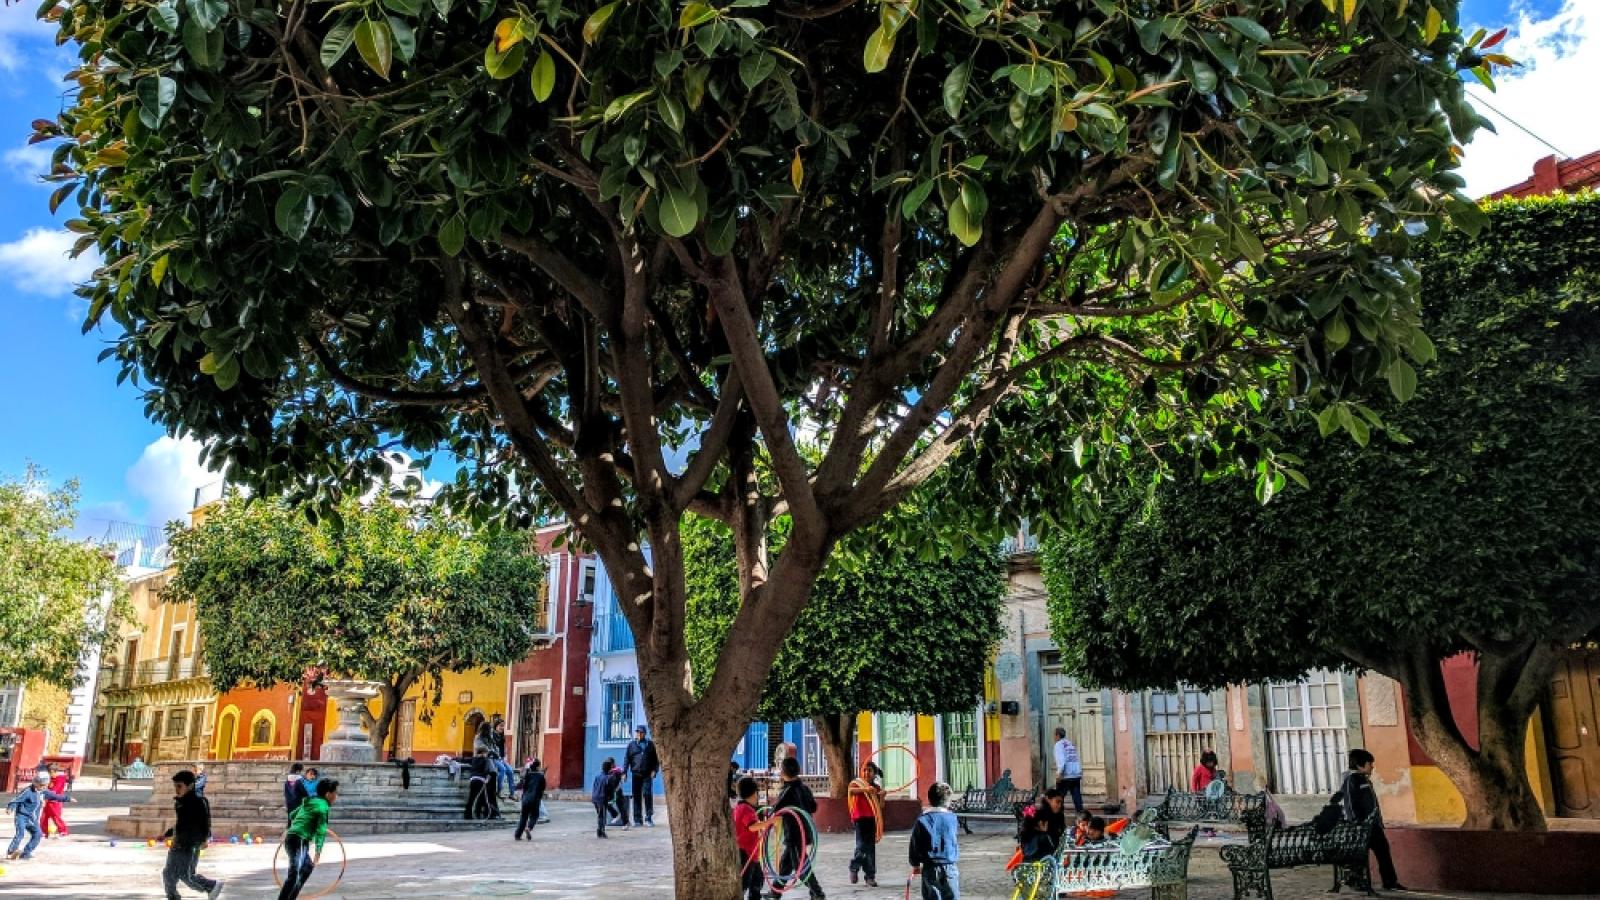 Foto pohon di alun-alun kota